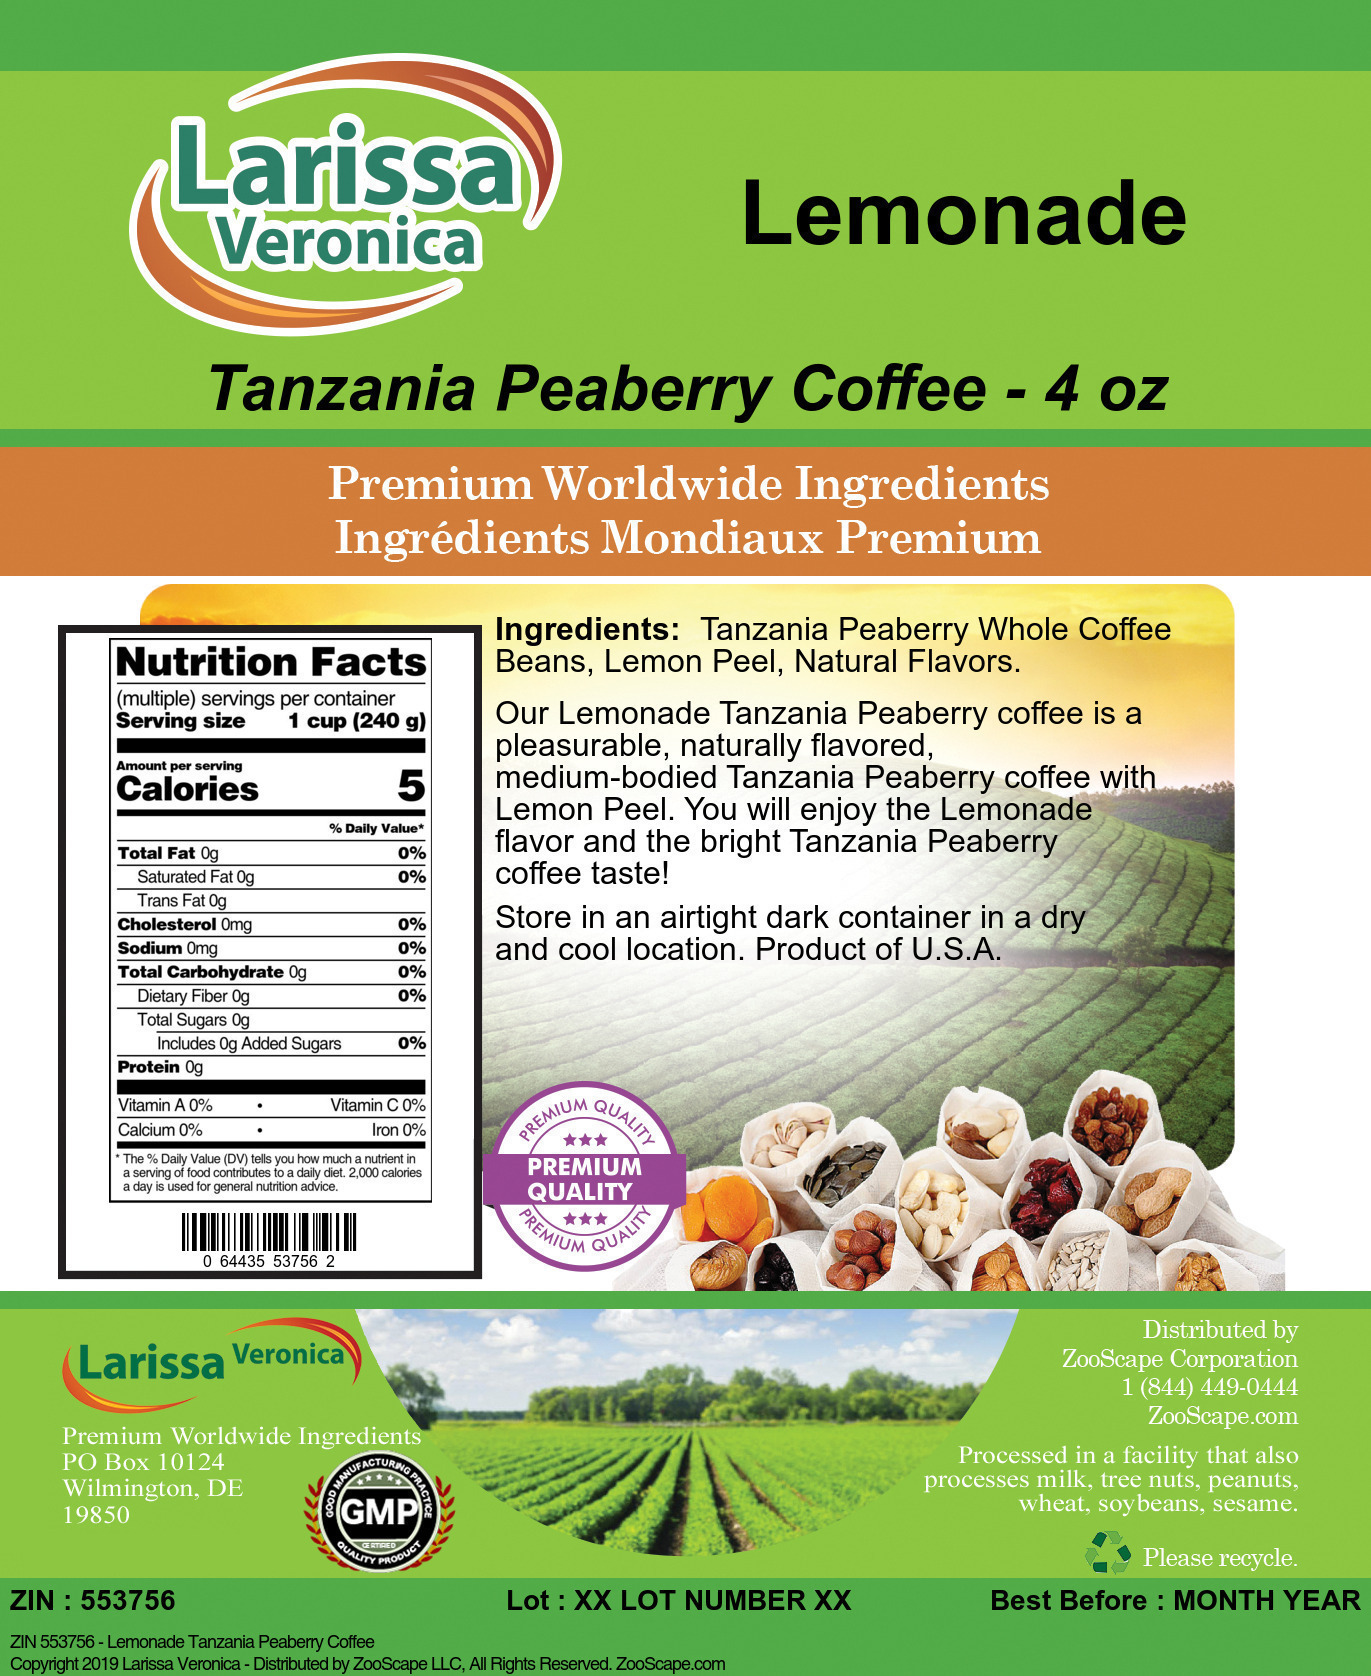 Lemonade Tanzania Peaberry Coffee - Label